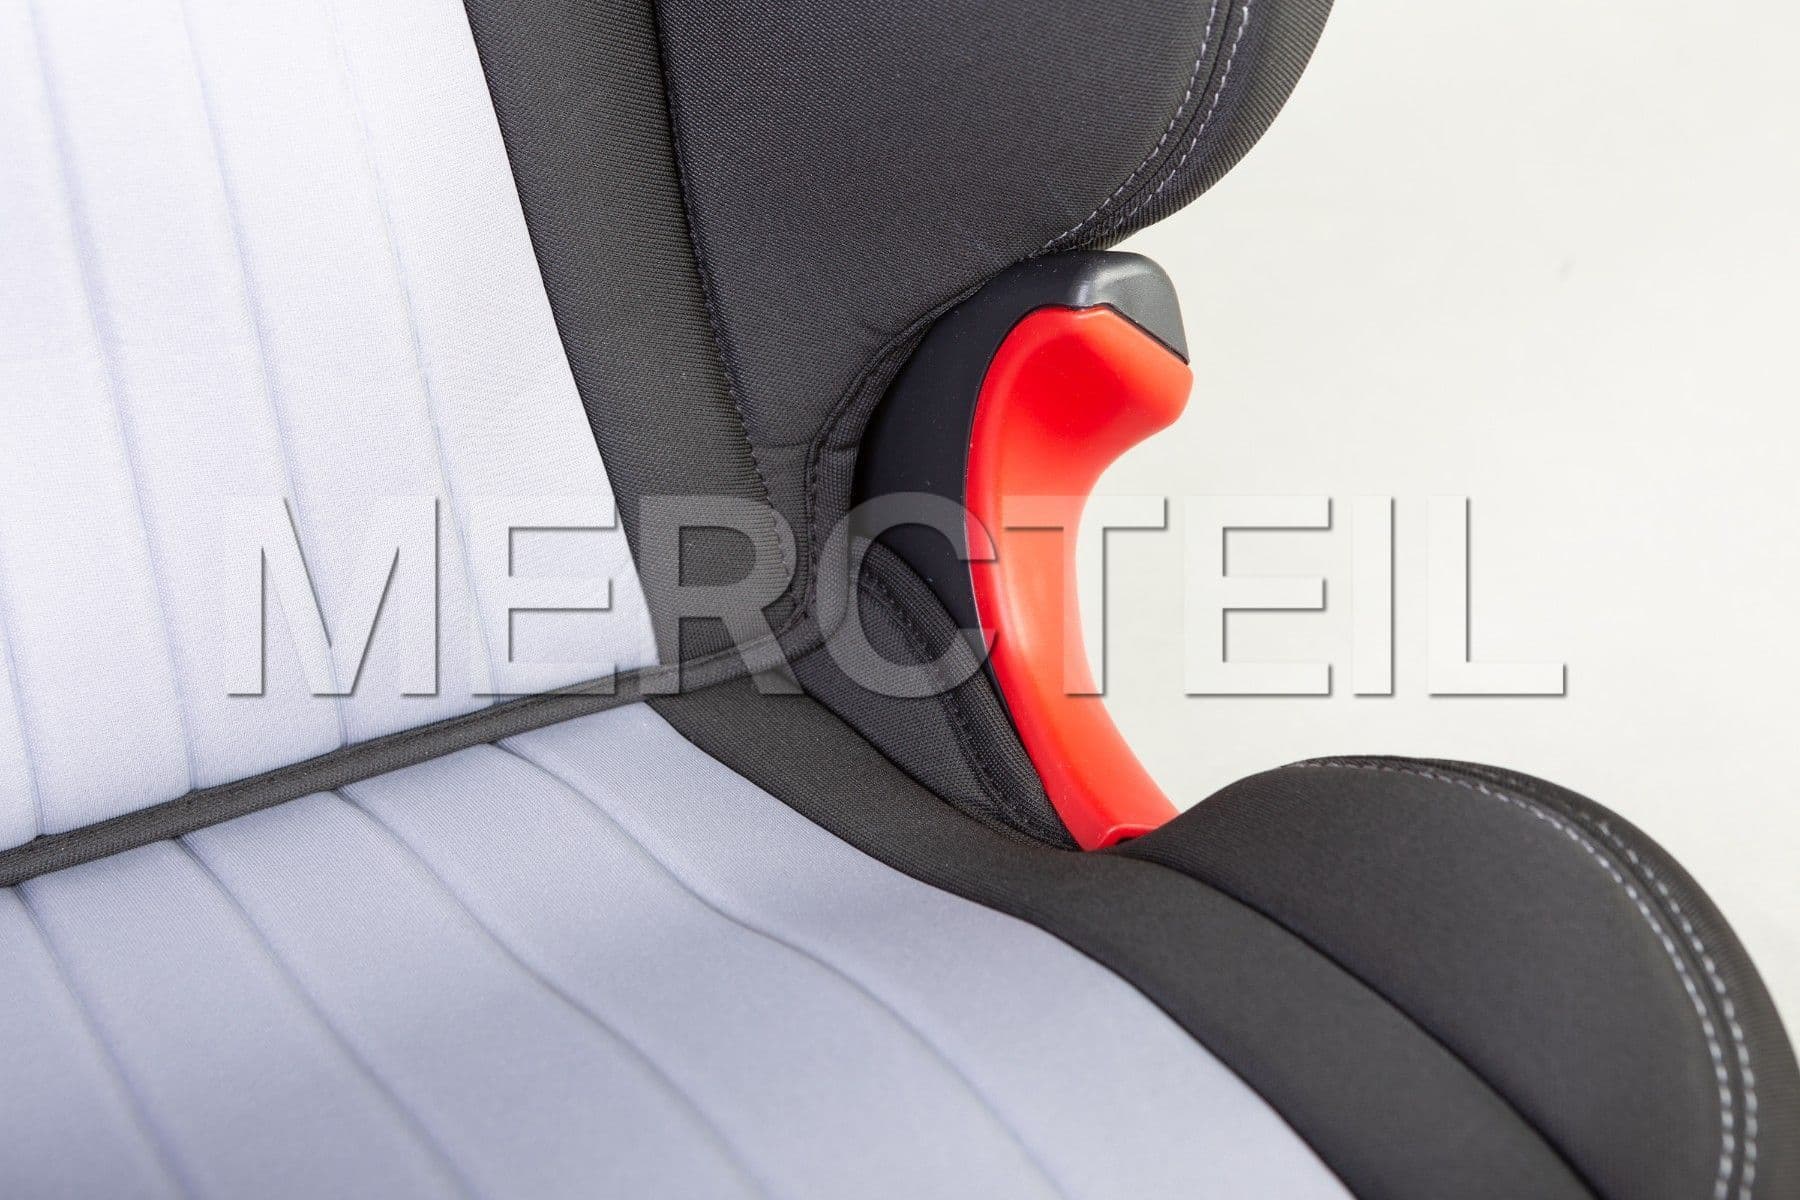 Kidfix Xp Child Seat Genuine Mercedes Benz Accessories (part number:  A0009704902)